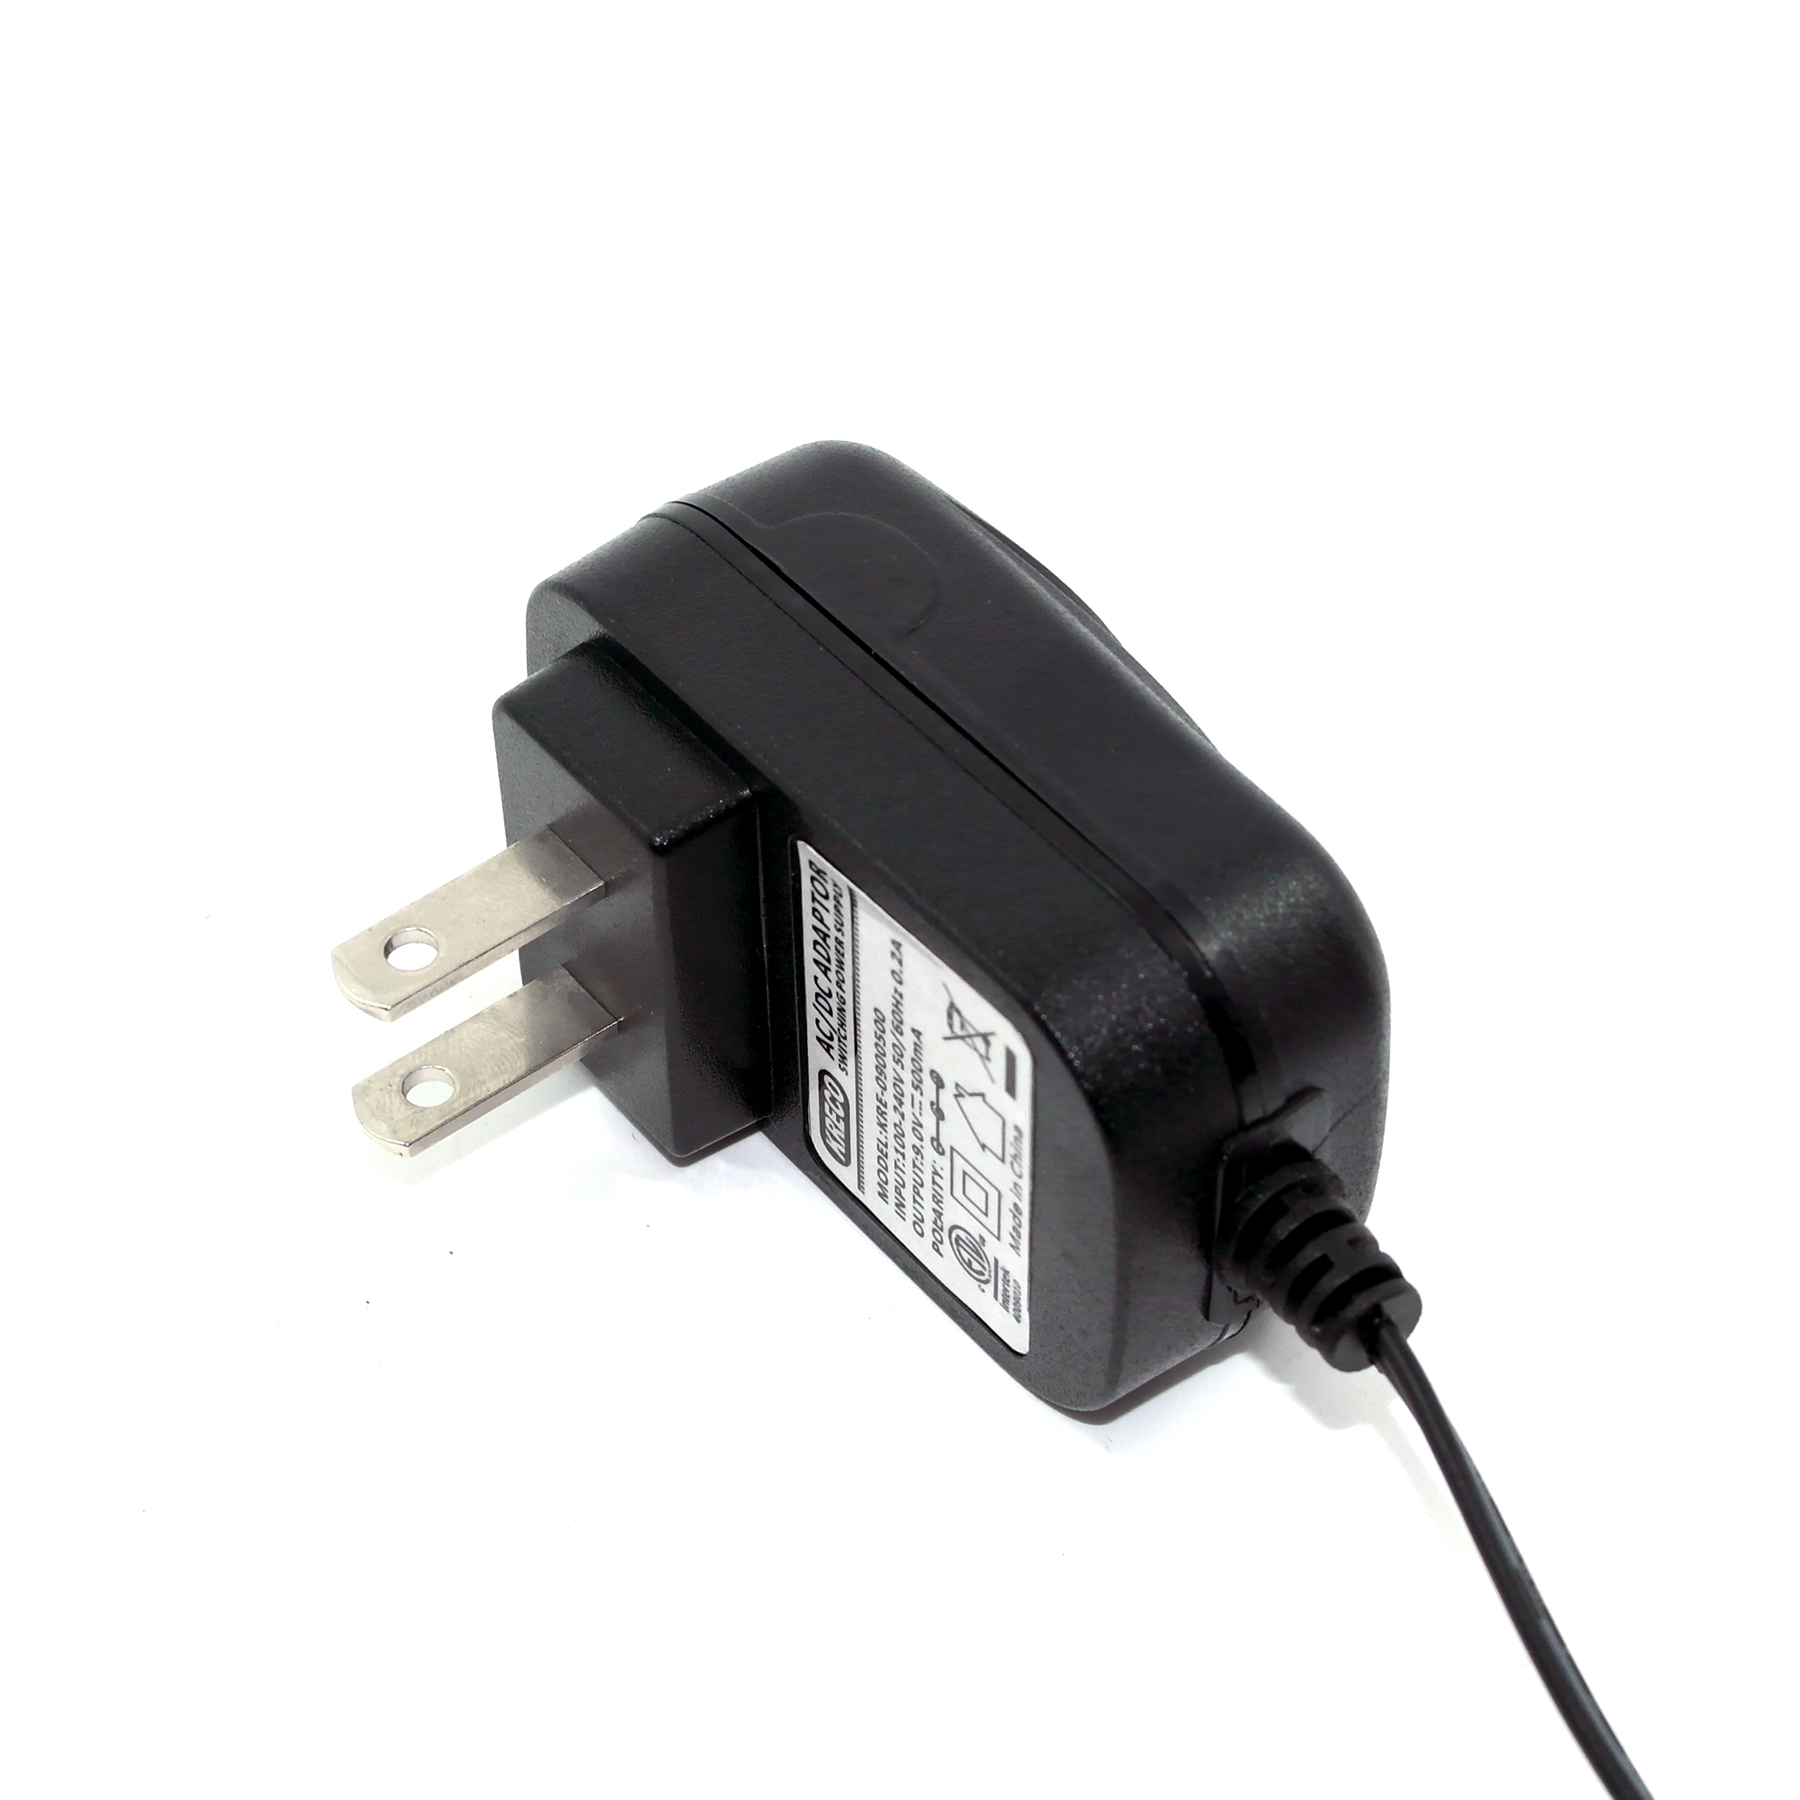 KRE-0501003,5V 1A 5W UL power adaptor, 5V 1A switching power supply